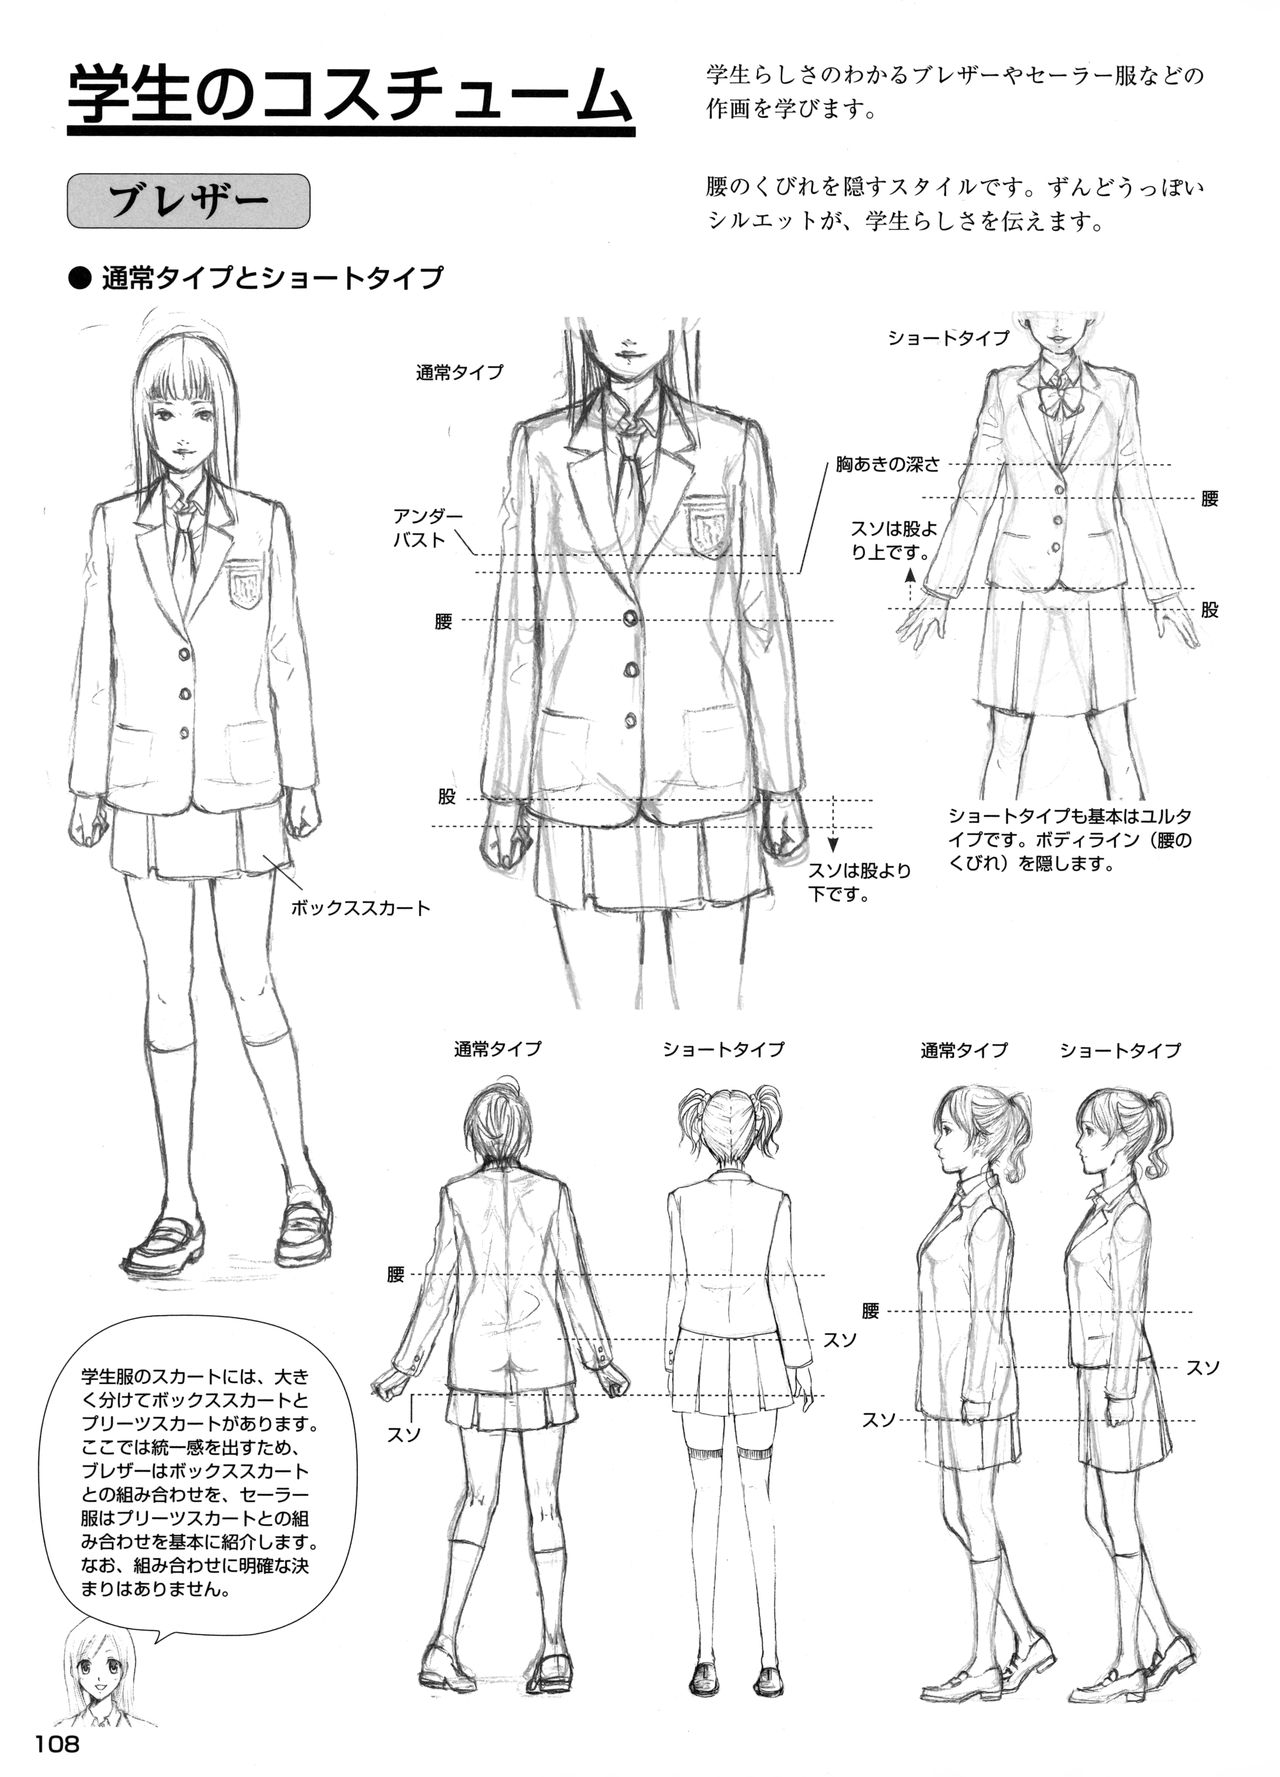 Manga no Kiso Dessin - Onnanoko Costume hen 108